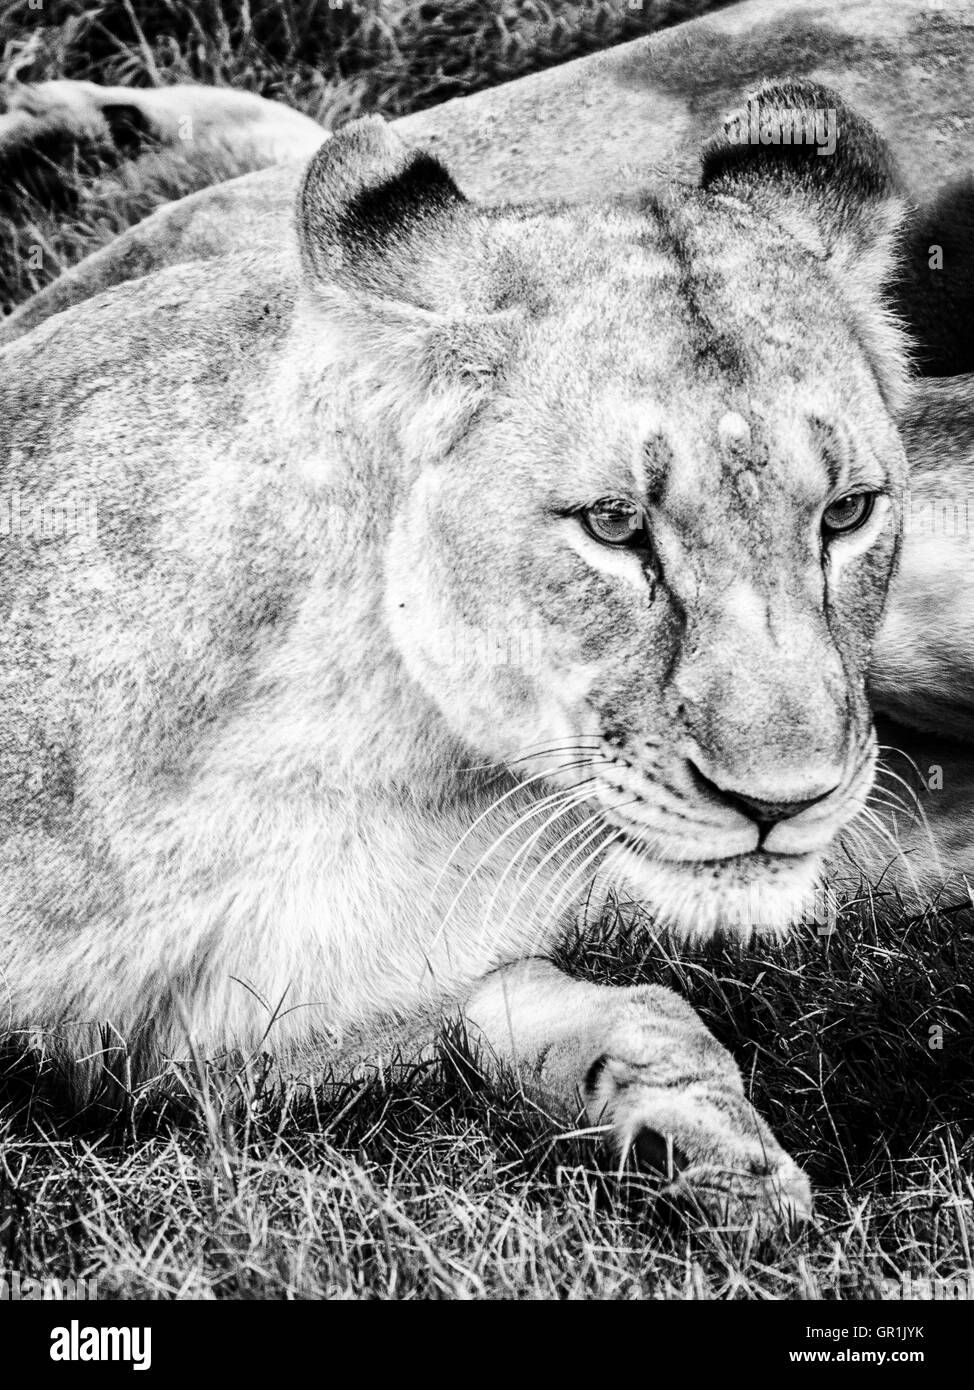 Portrait Of A Lioness (Panthera leo bleyenberghi) In Monochrome Stock Photo